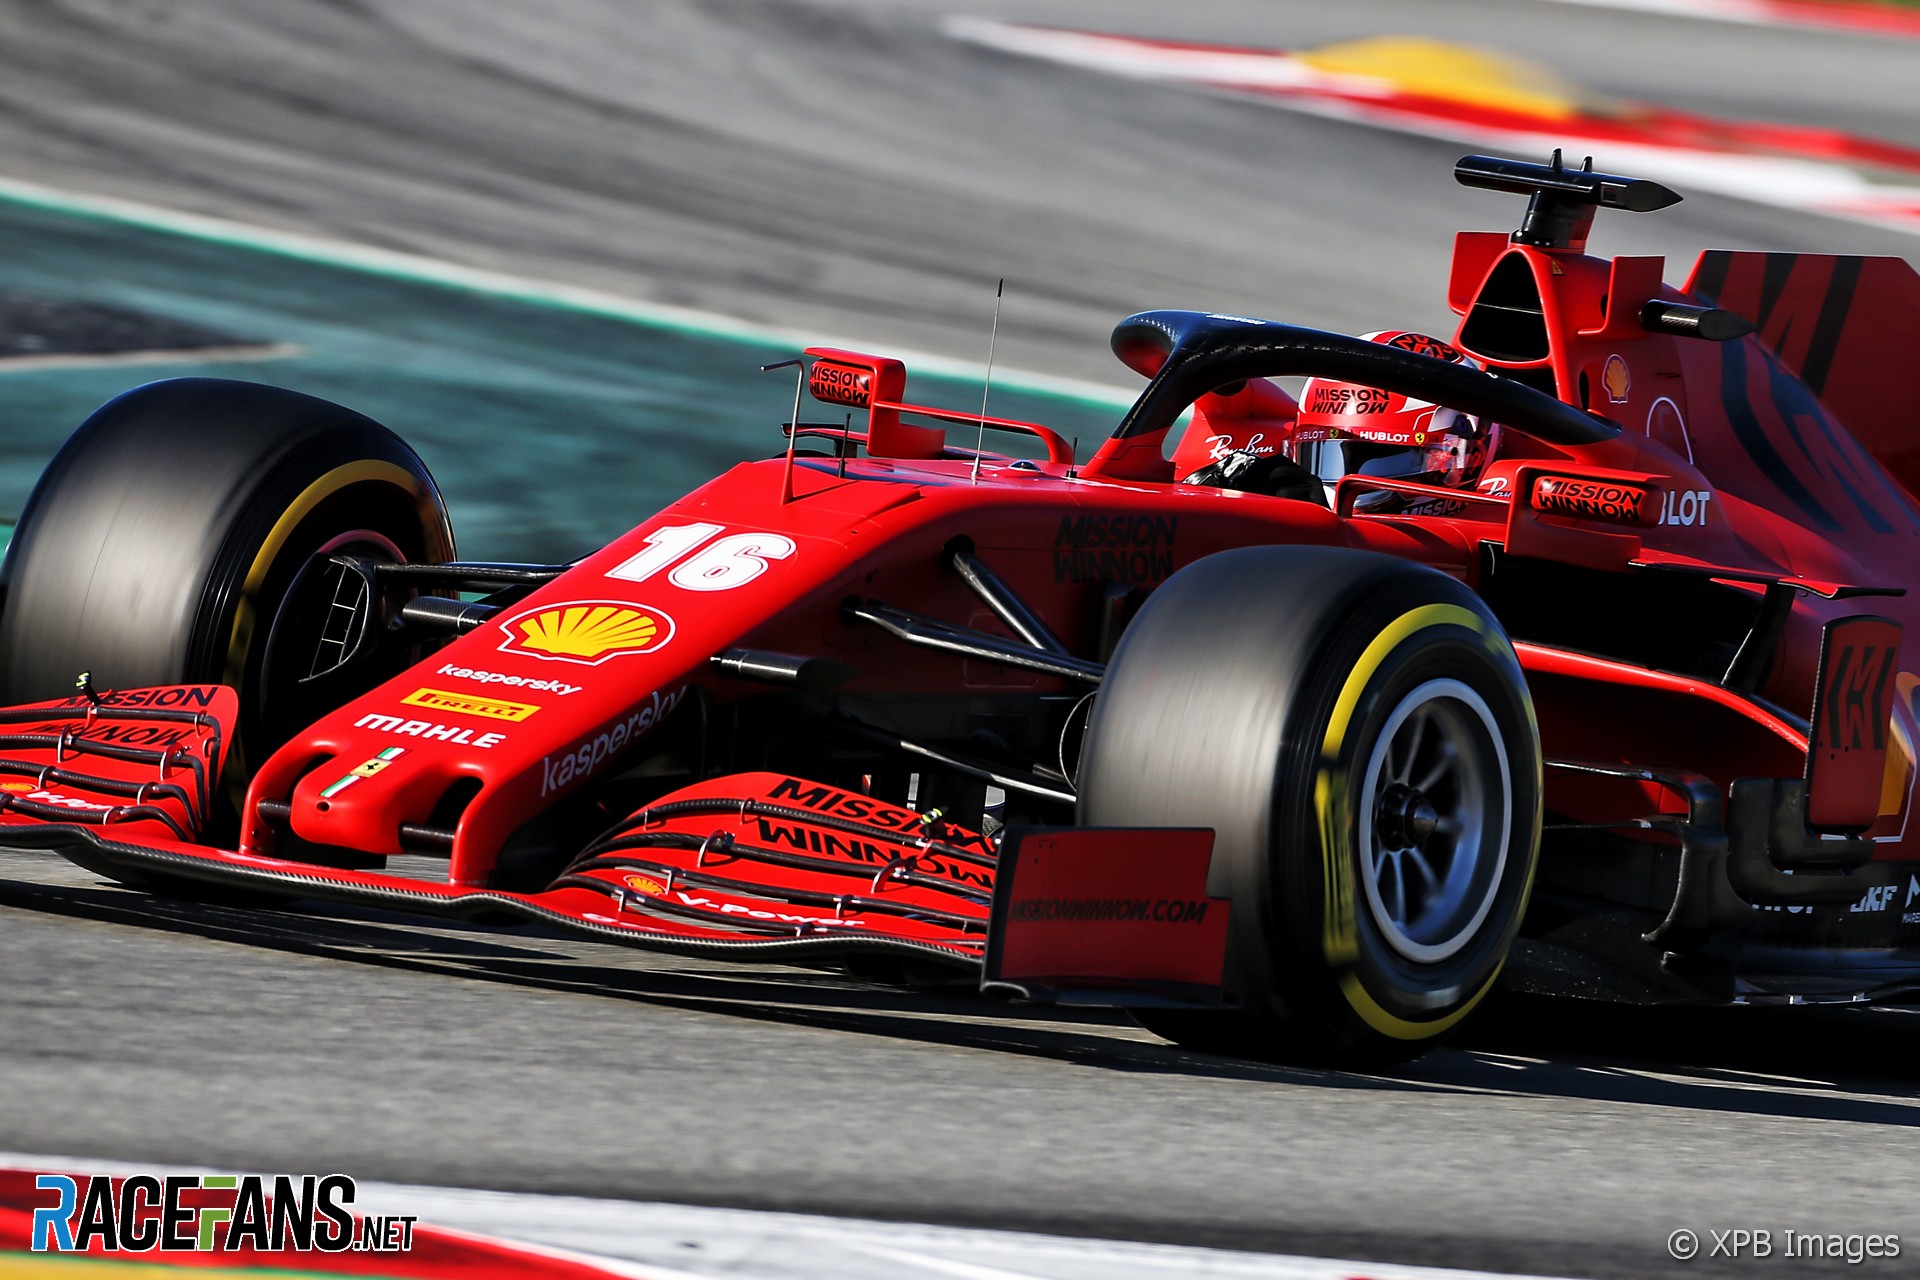 Charles Leclerc, Ferrari, Circuit de Catalunya, 2020